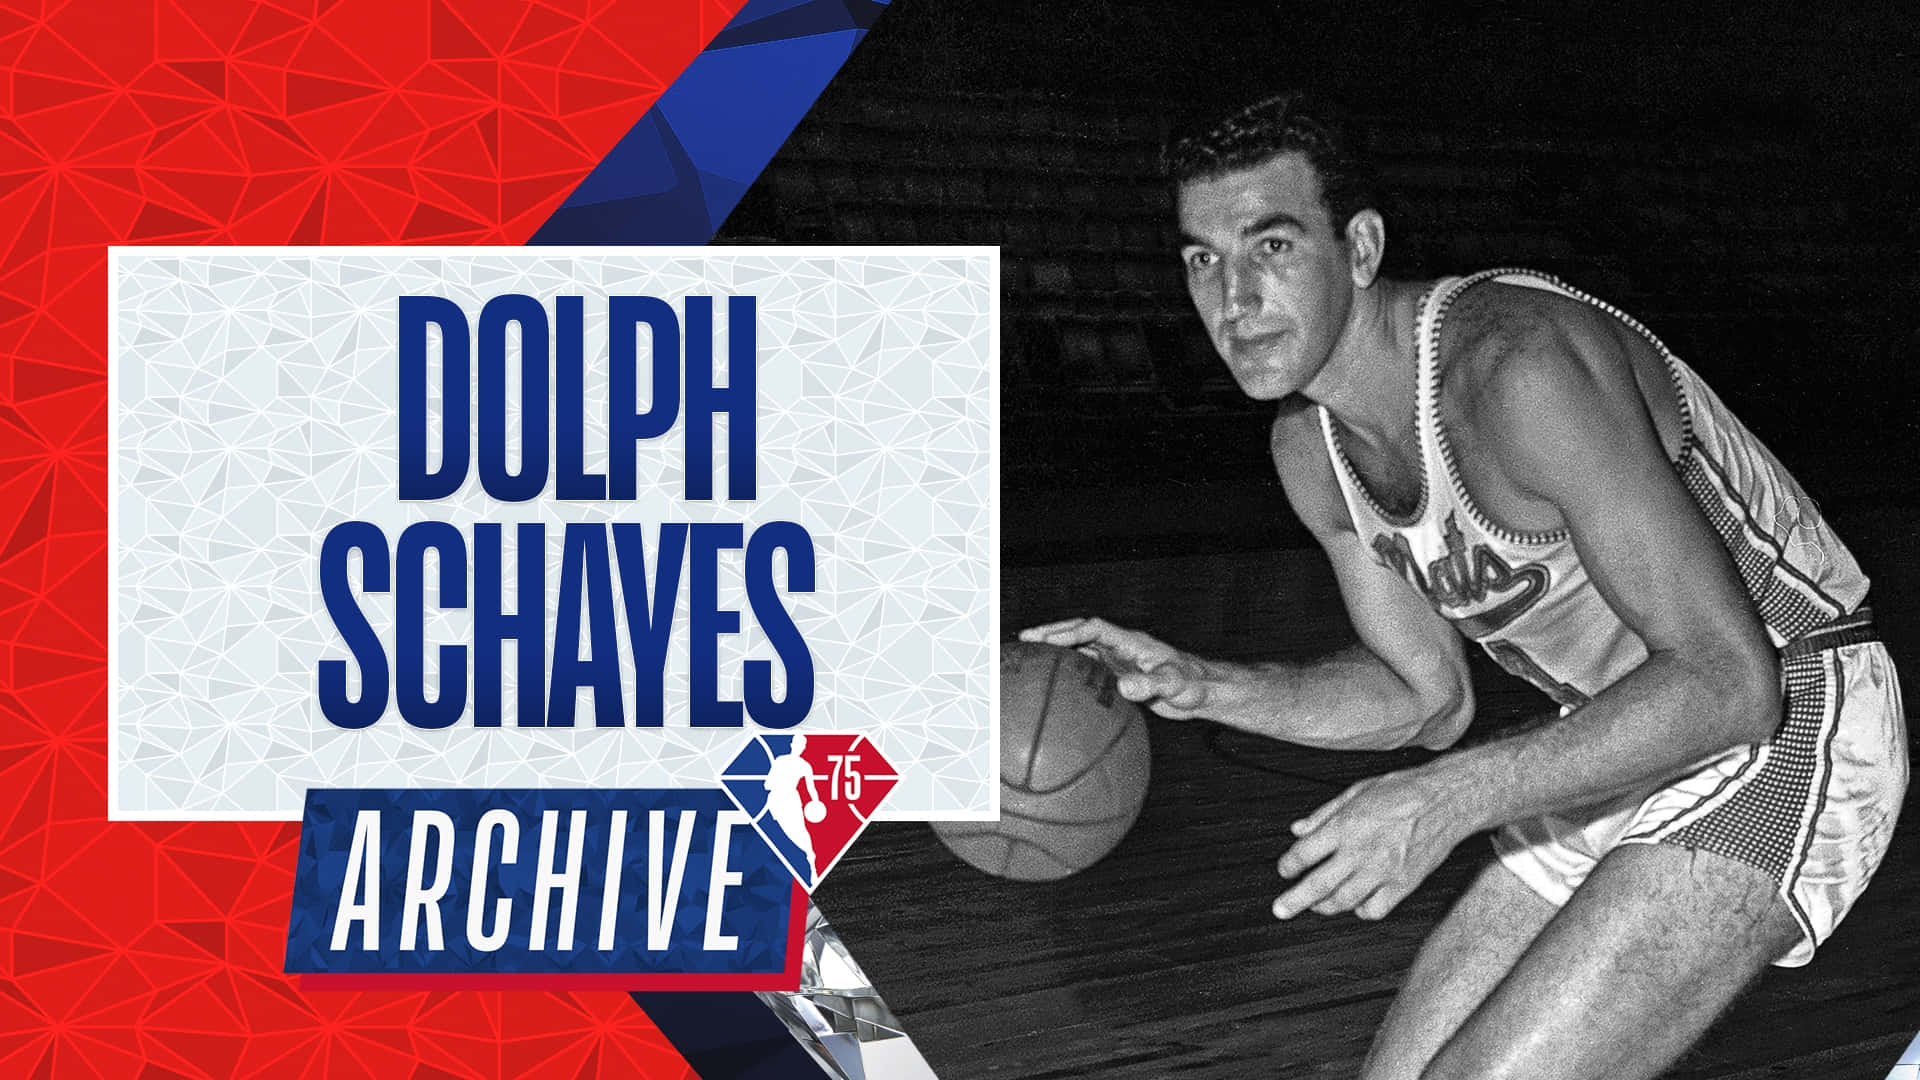 Dolph Schayes NBA Center Player Wallpaper